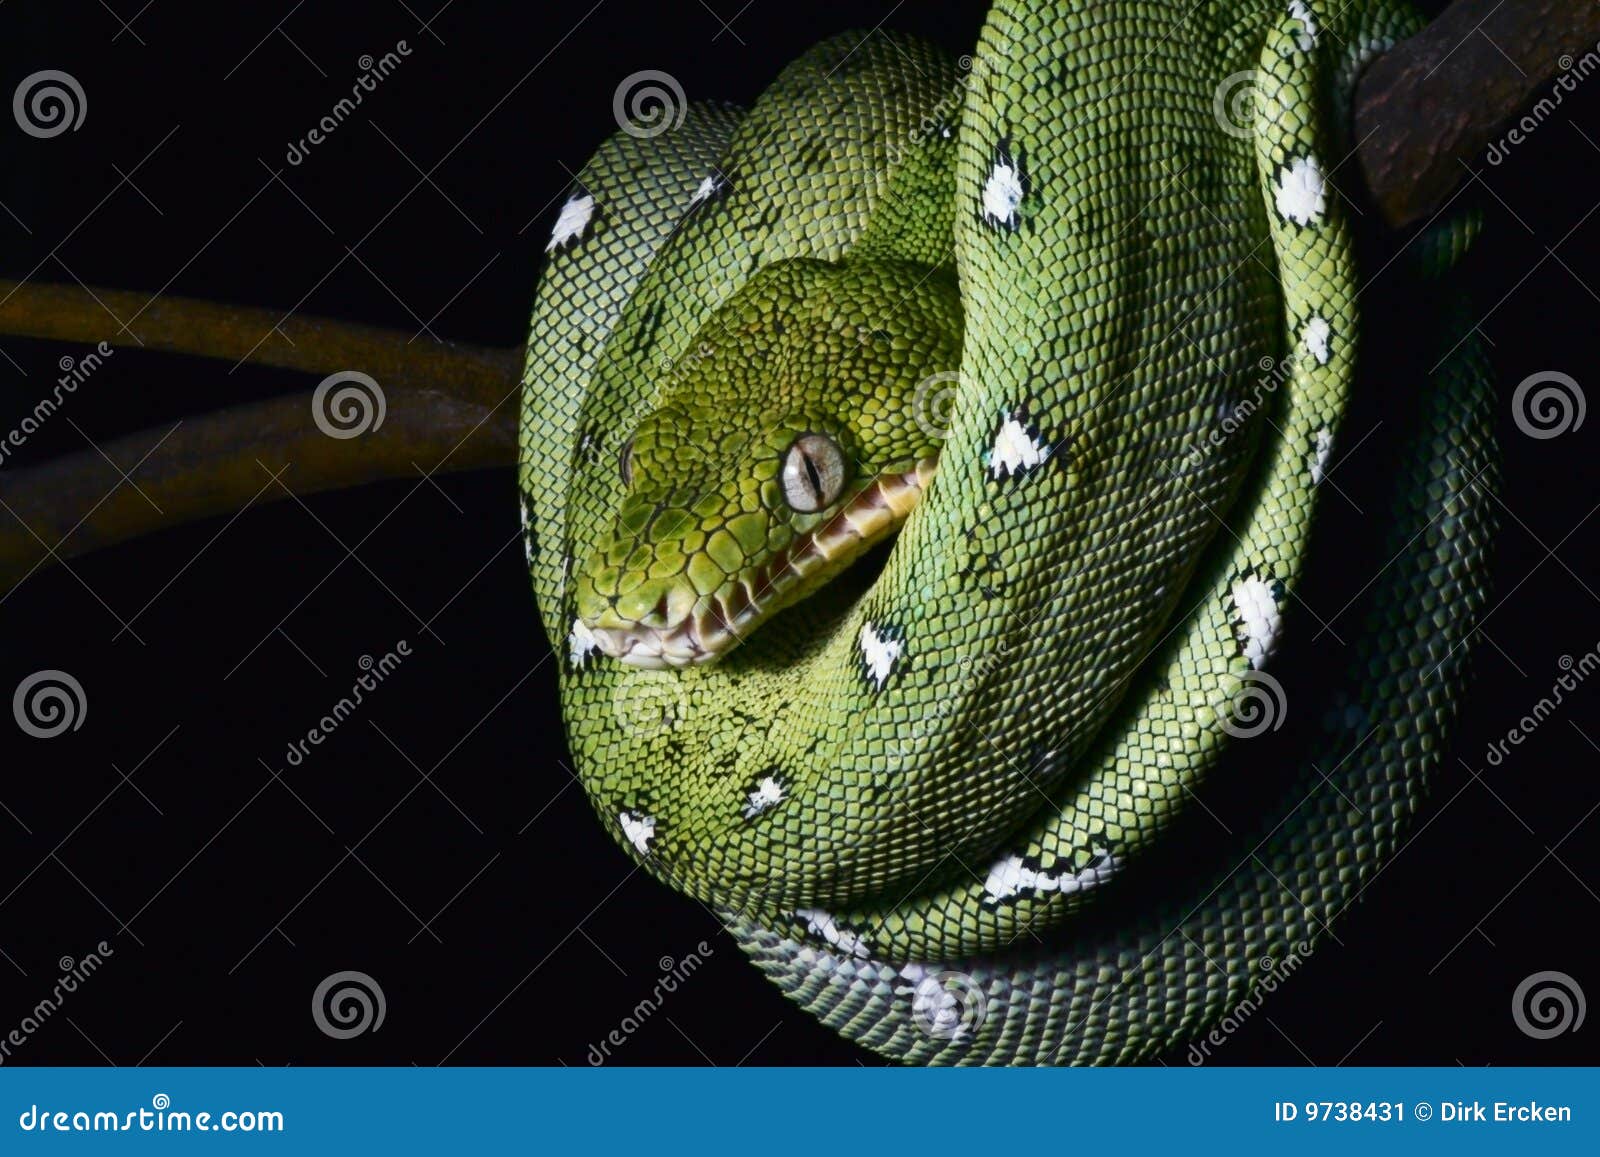 Green Snake Coiled Amazon Jungle Boa Reptile Stock Image - Image: 97384311300 x 957